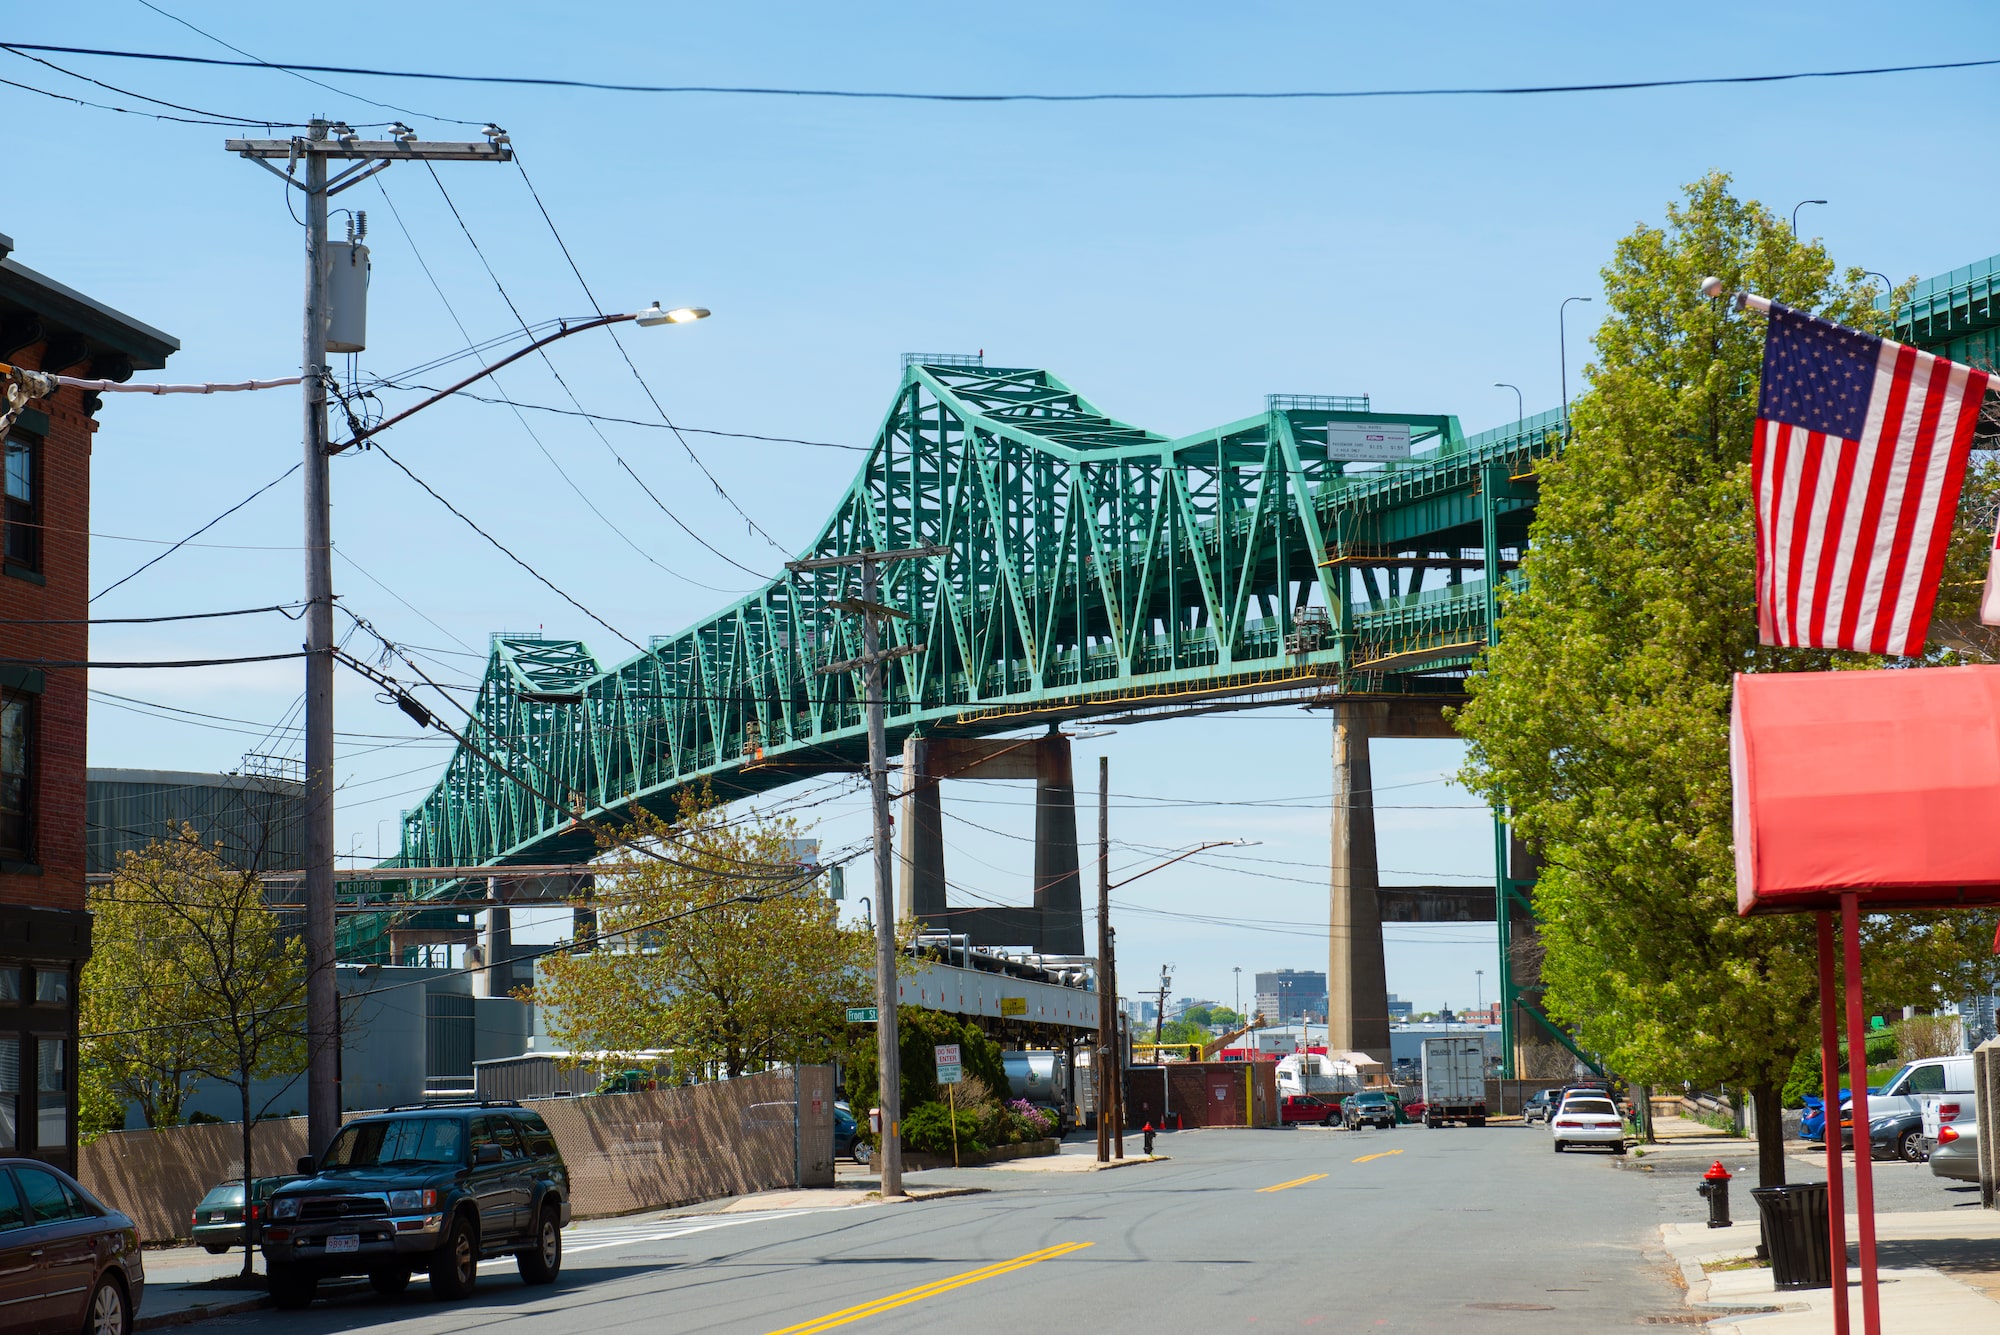 Metal, green Maurice Tobin Bridge with street below and cars.